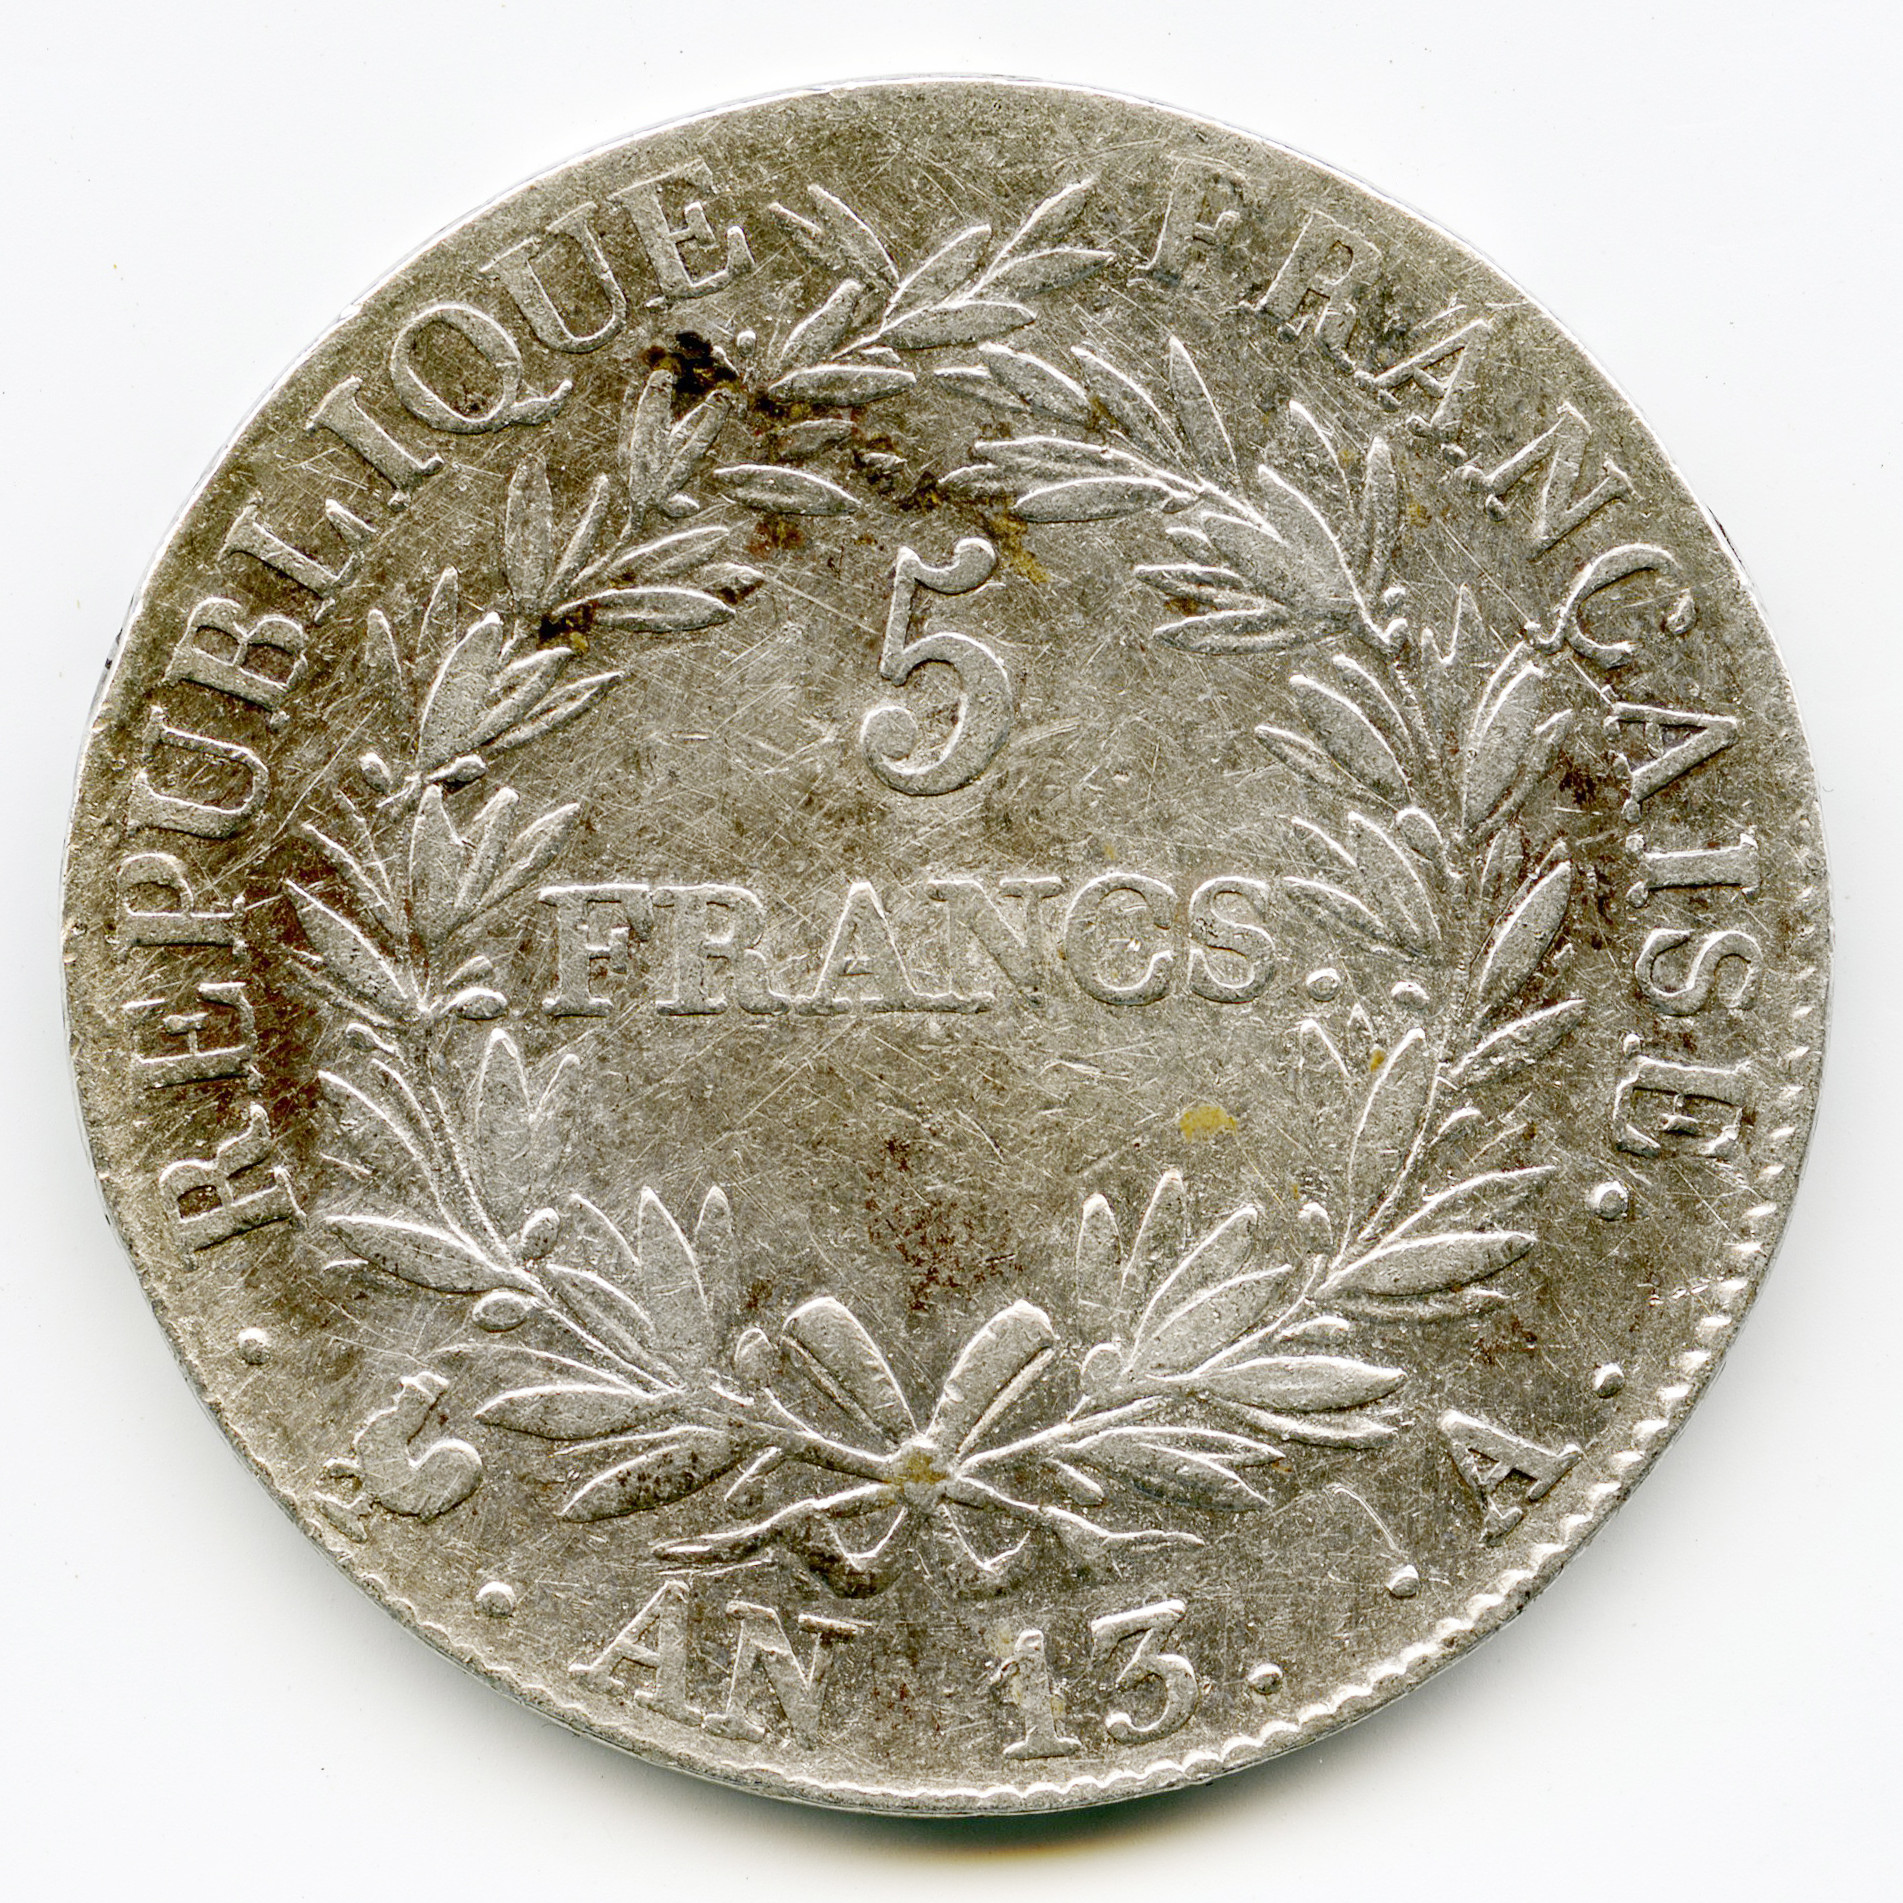 Napoléon Empereur - 5 Francs - An 13 A revers